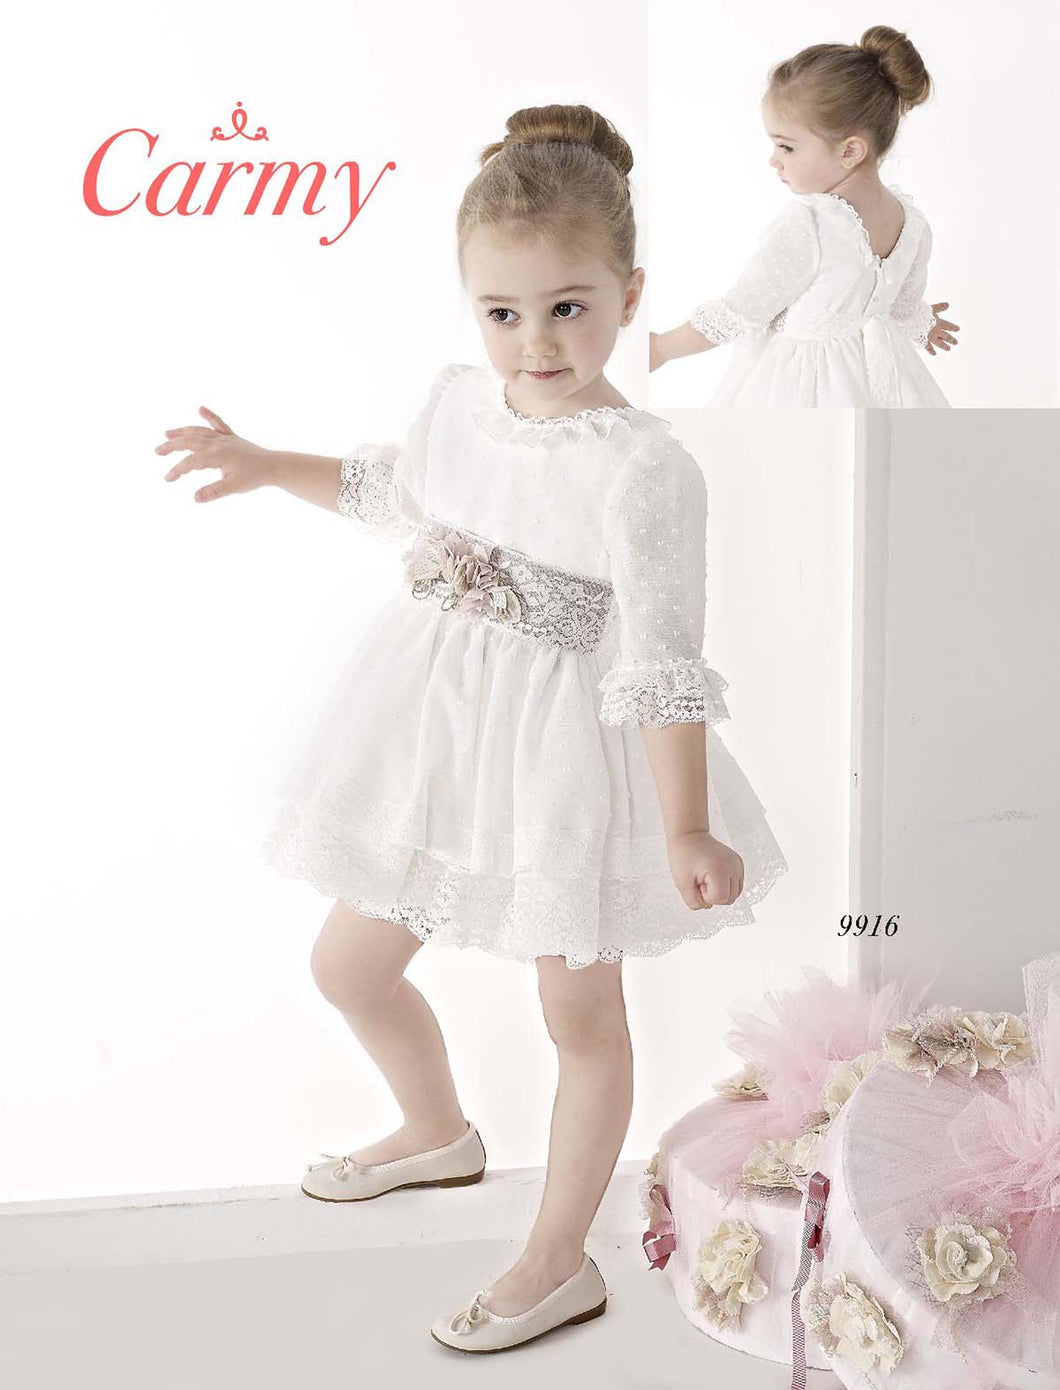 SALE Carmy Flower Girl Dress 9916G - Ivory